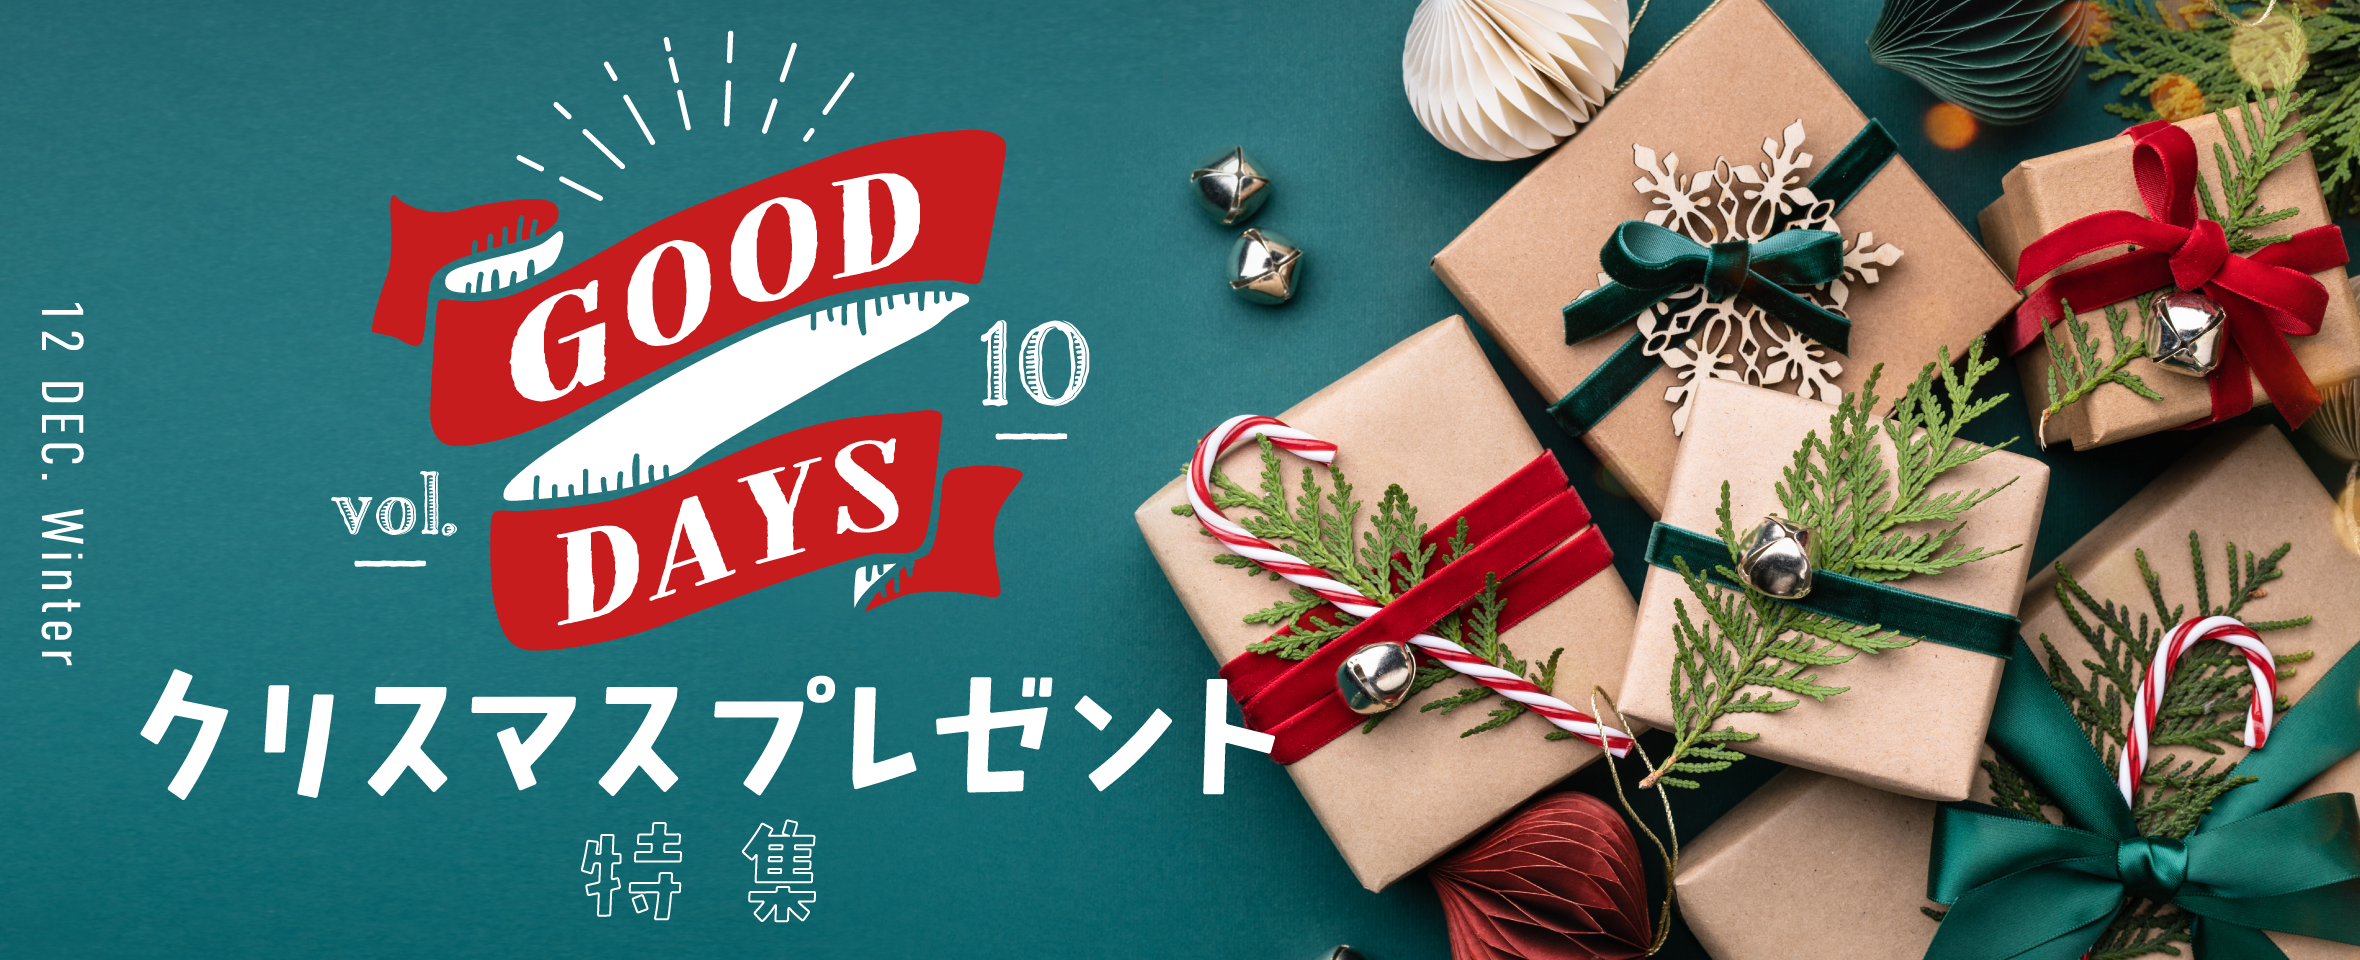 GOOD DAYS Vol.10 クリスマスプレゼント 特集